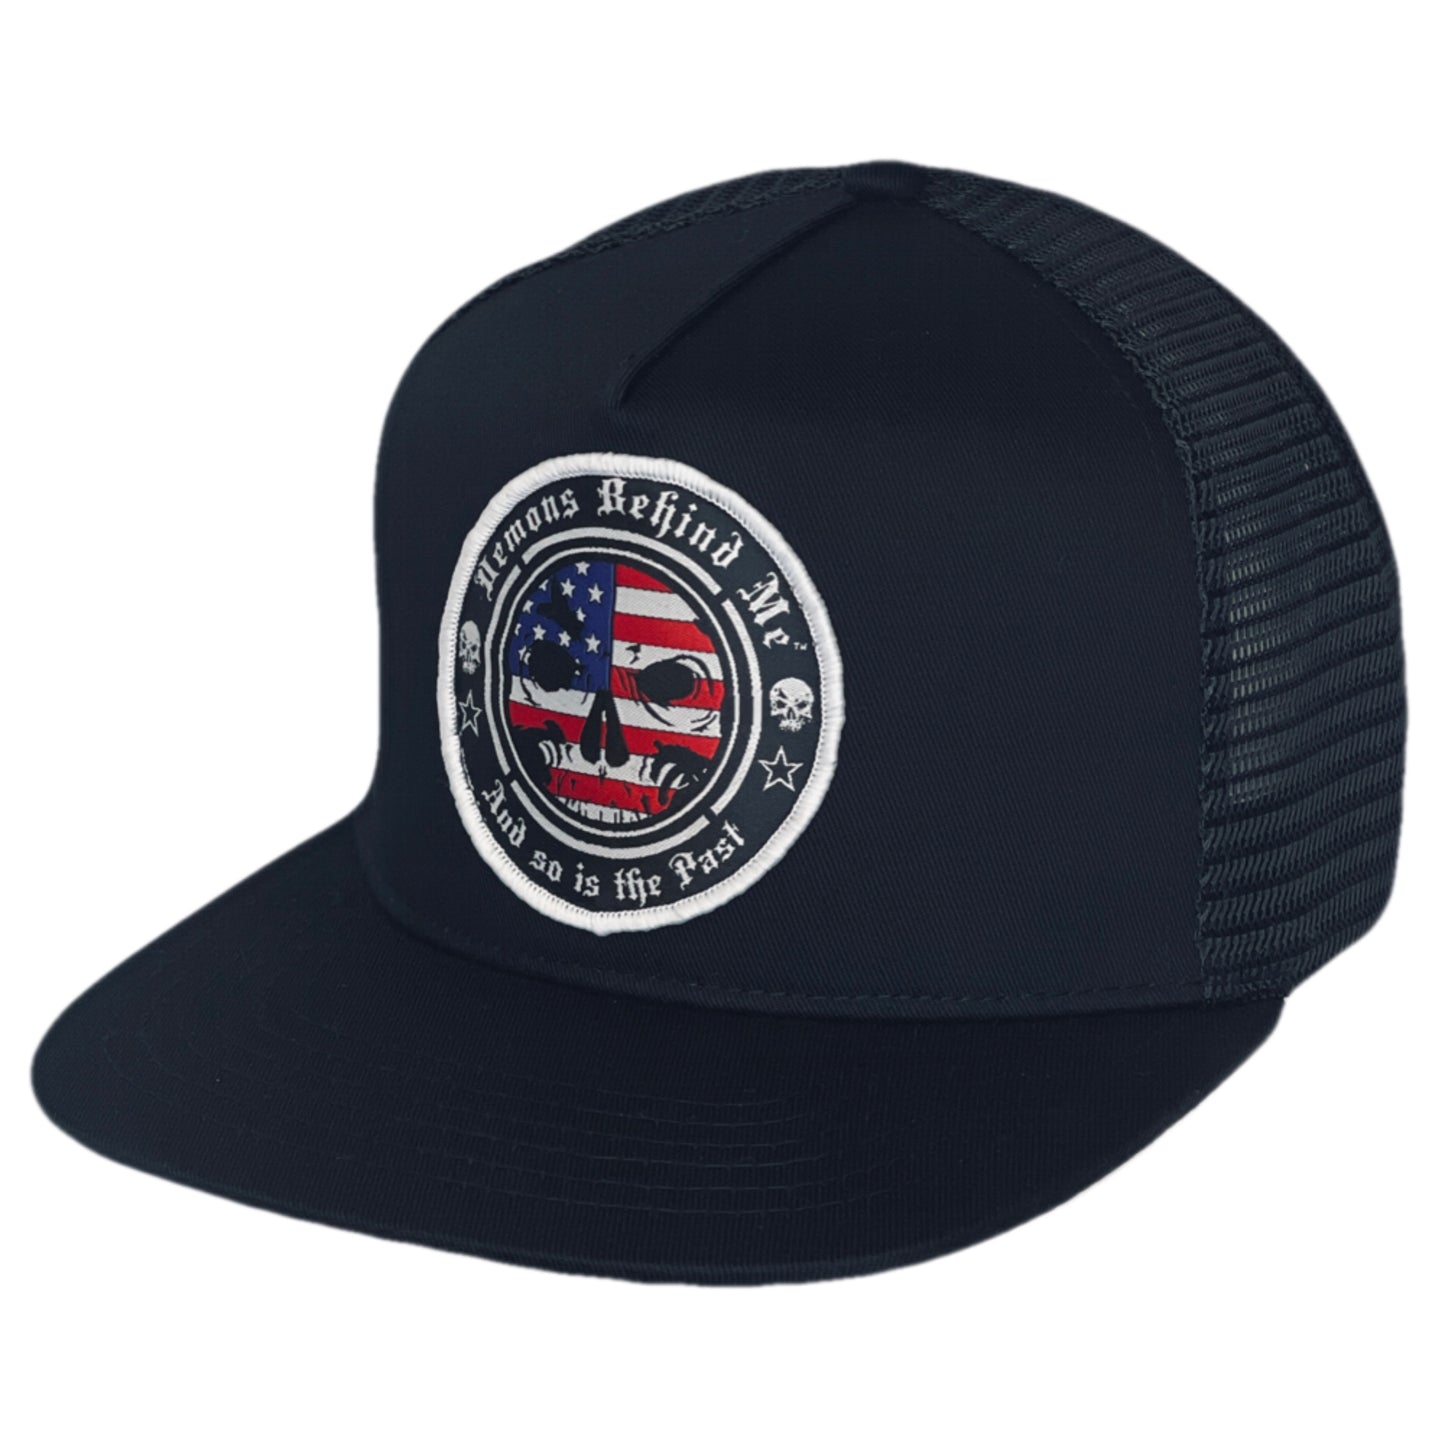 NEW! Black Classic Trucker Patriotic Patch Hat